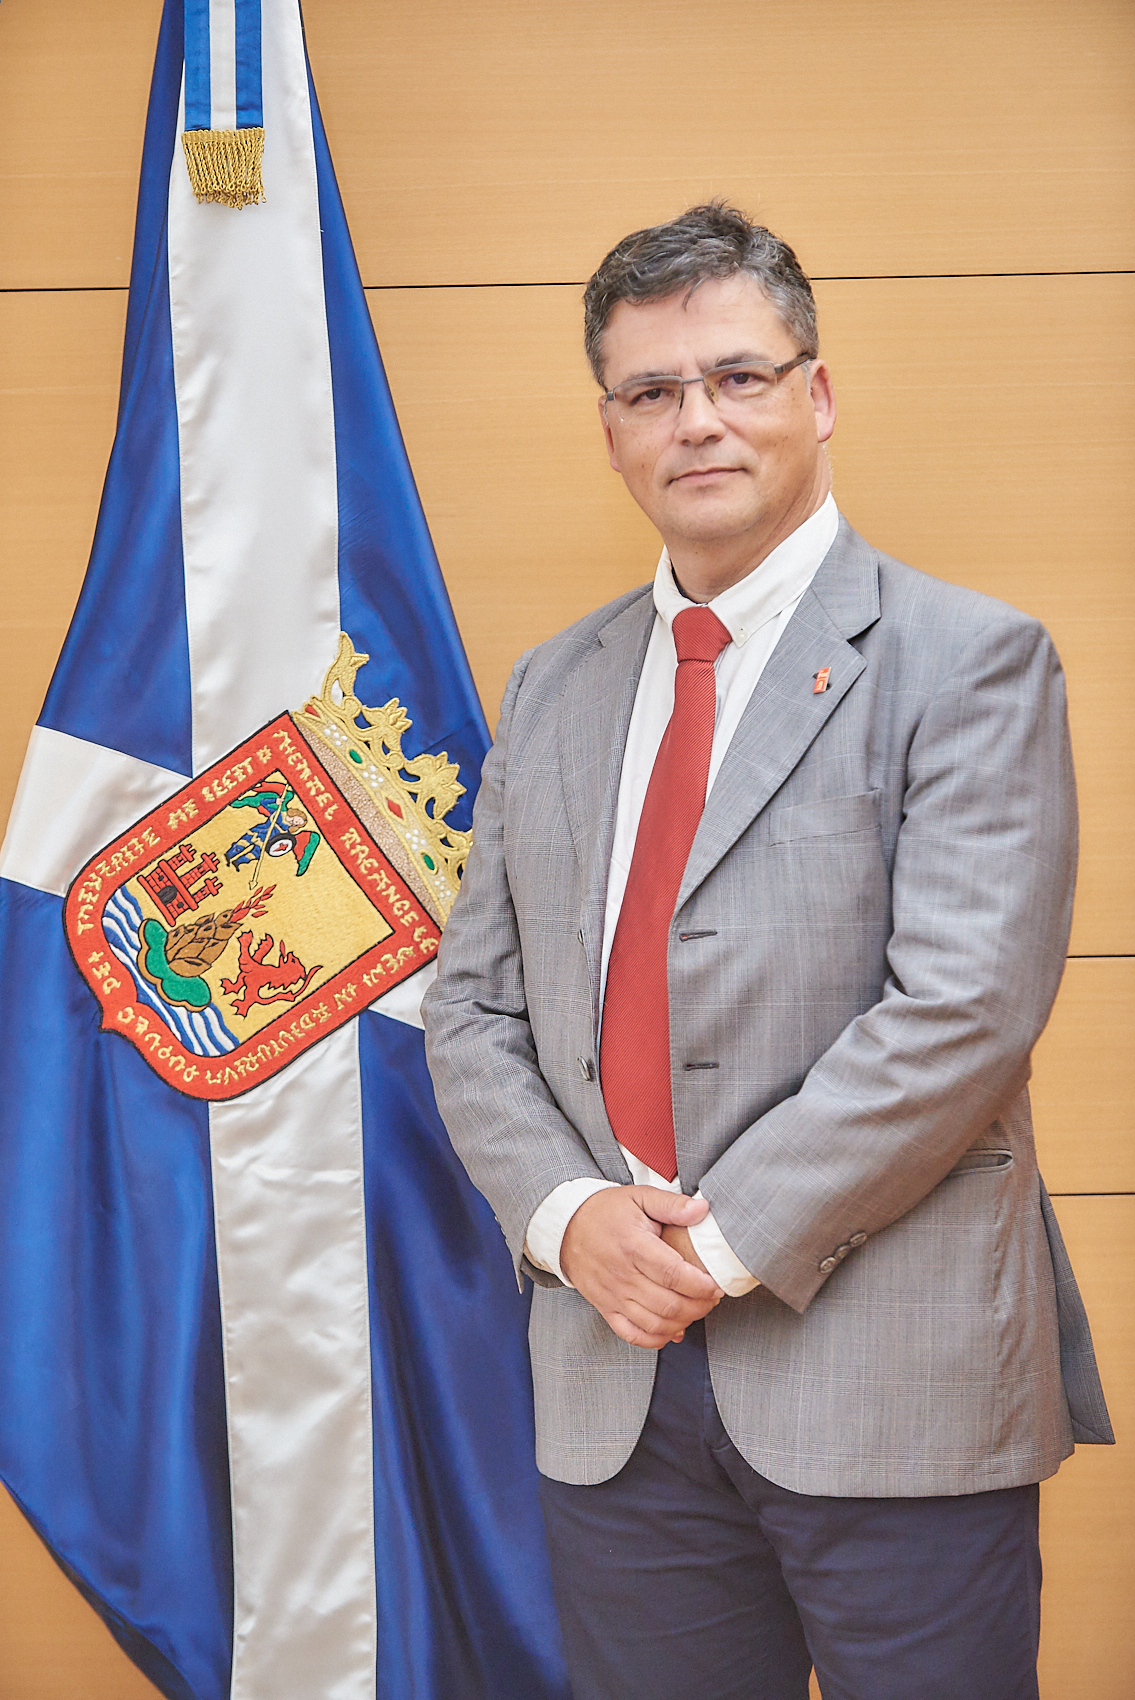 Sr. D. Francisco Javier Parrilla Gómez